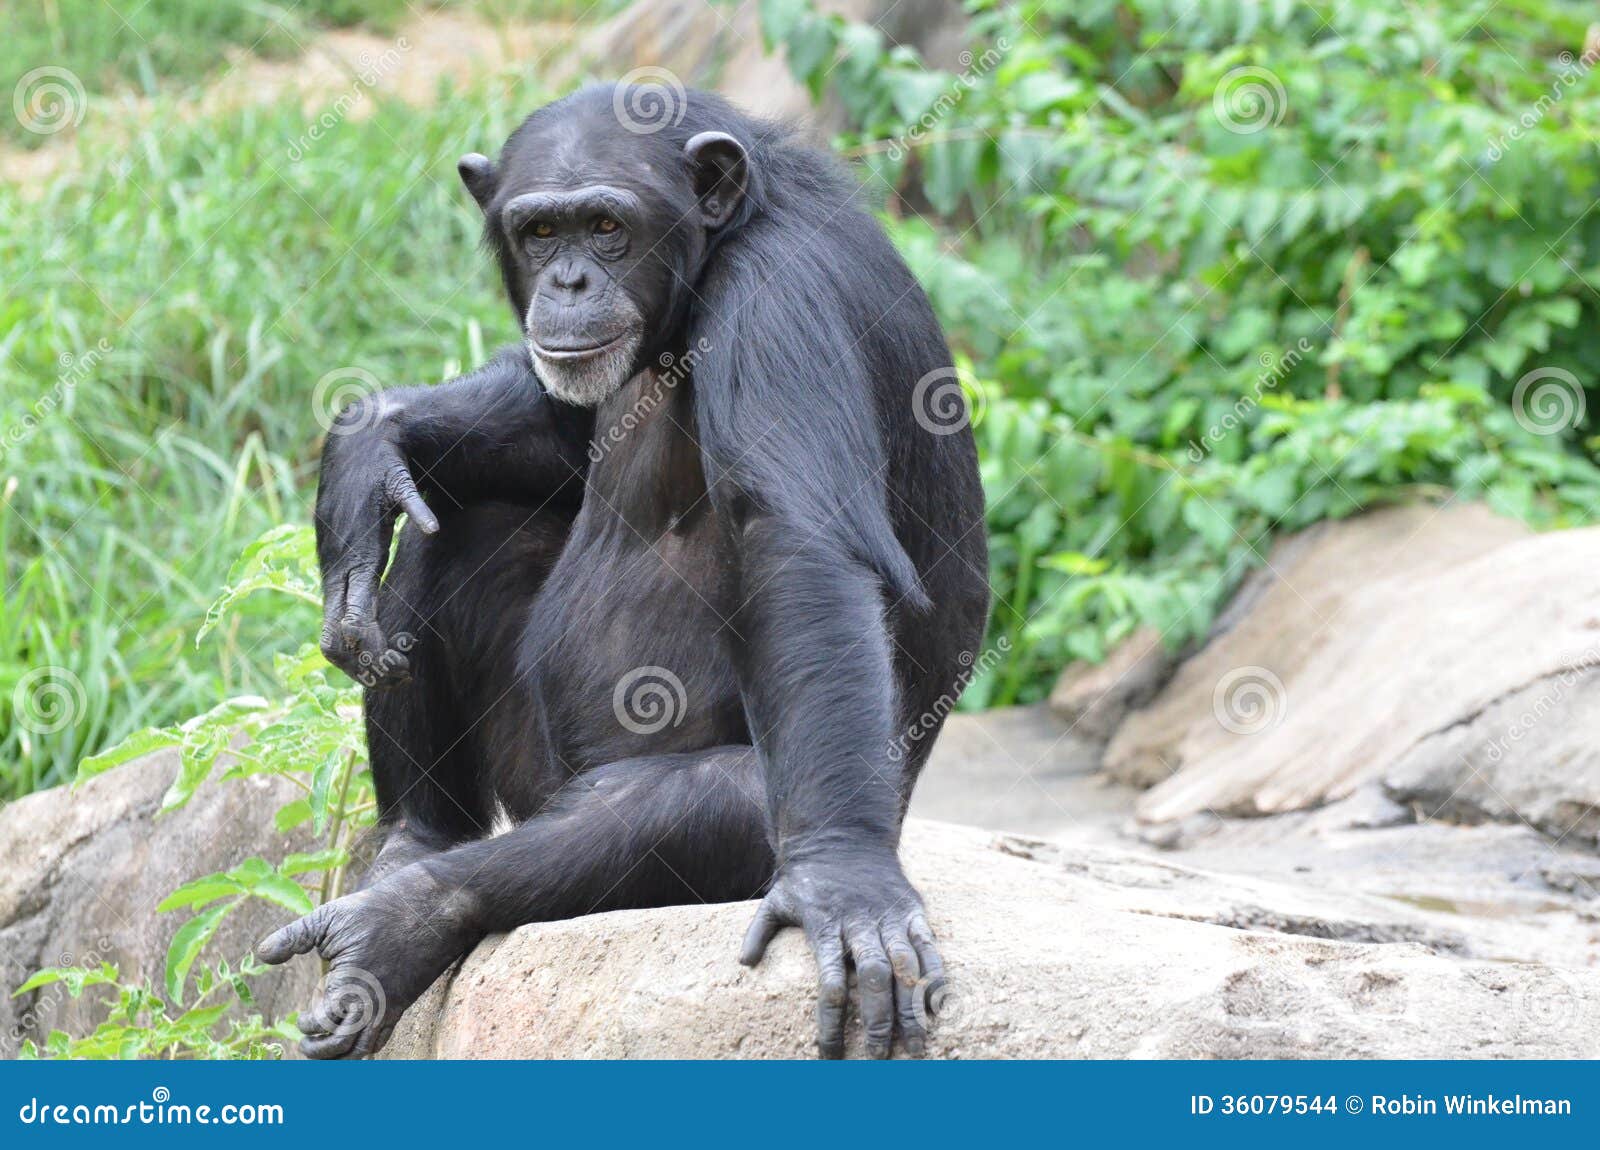 chimp on a rock